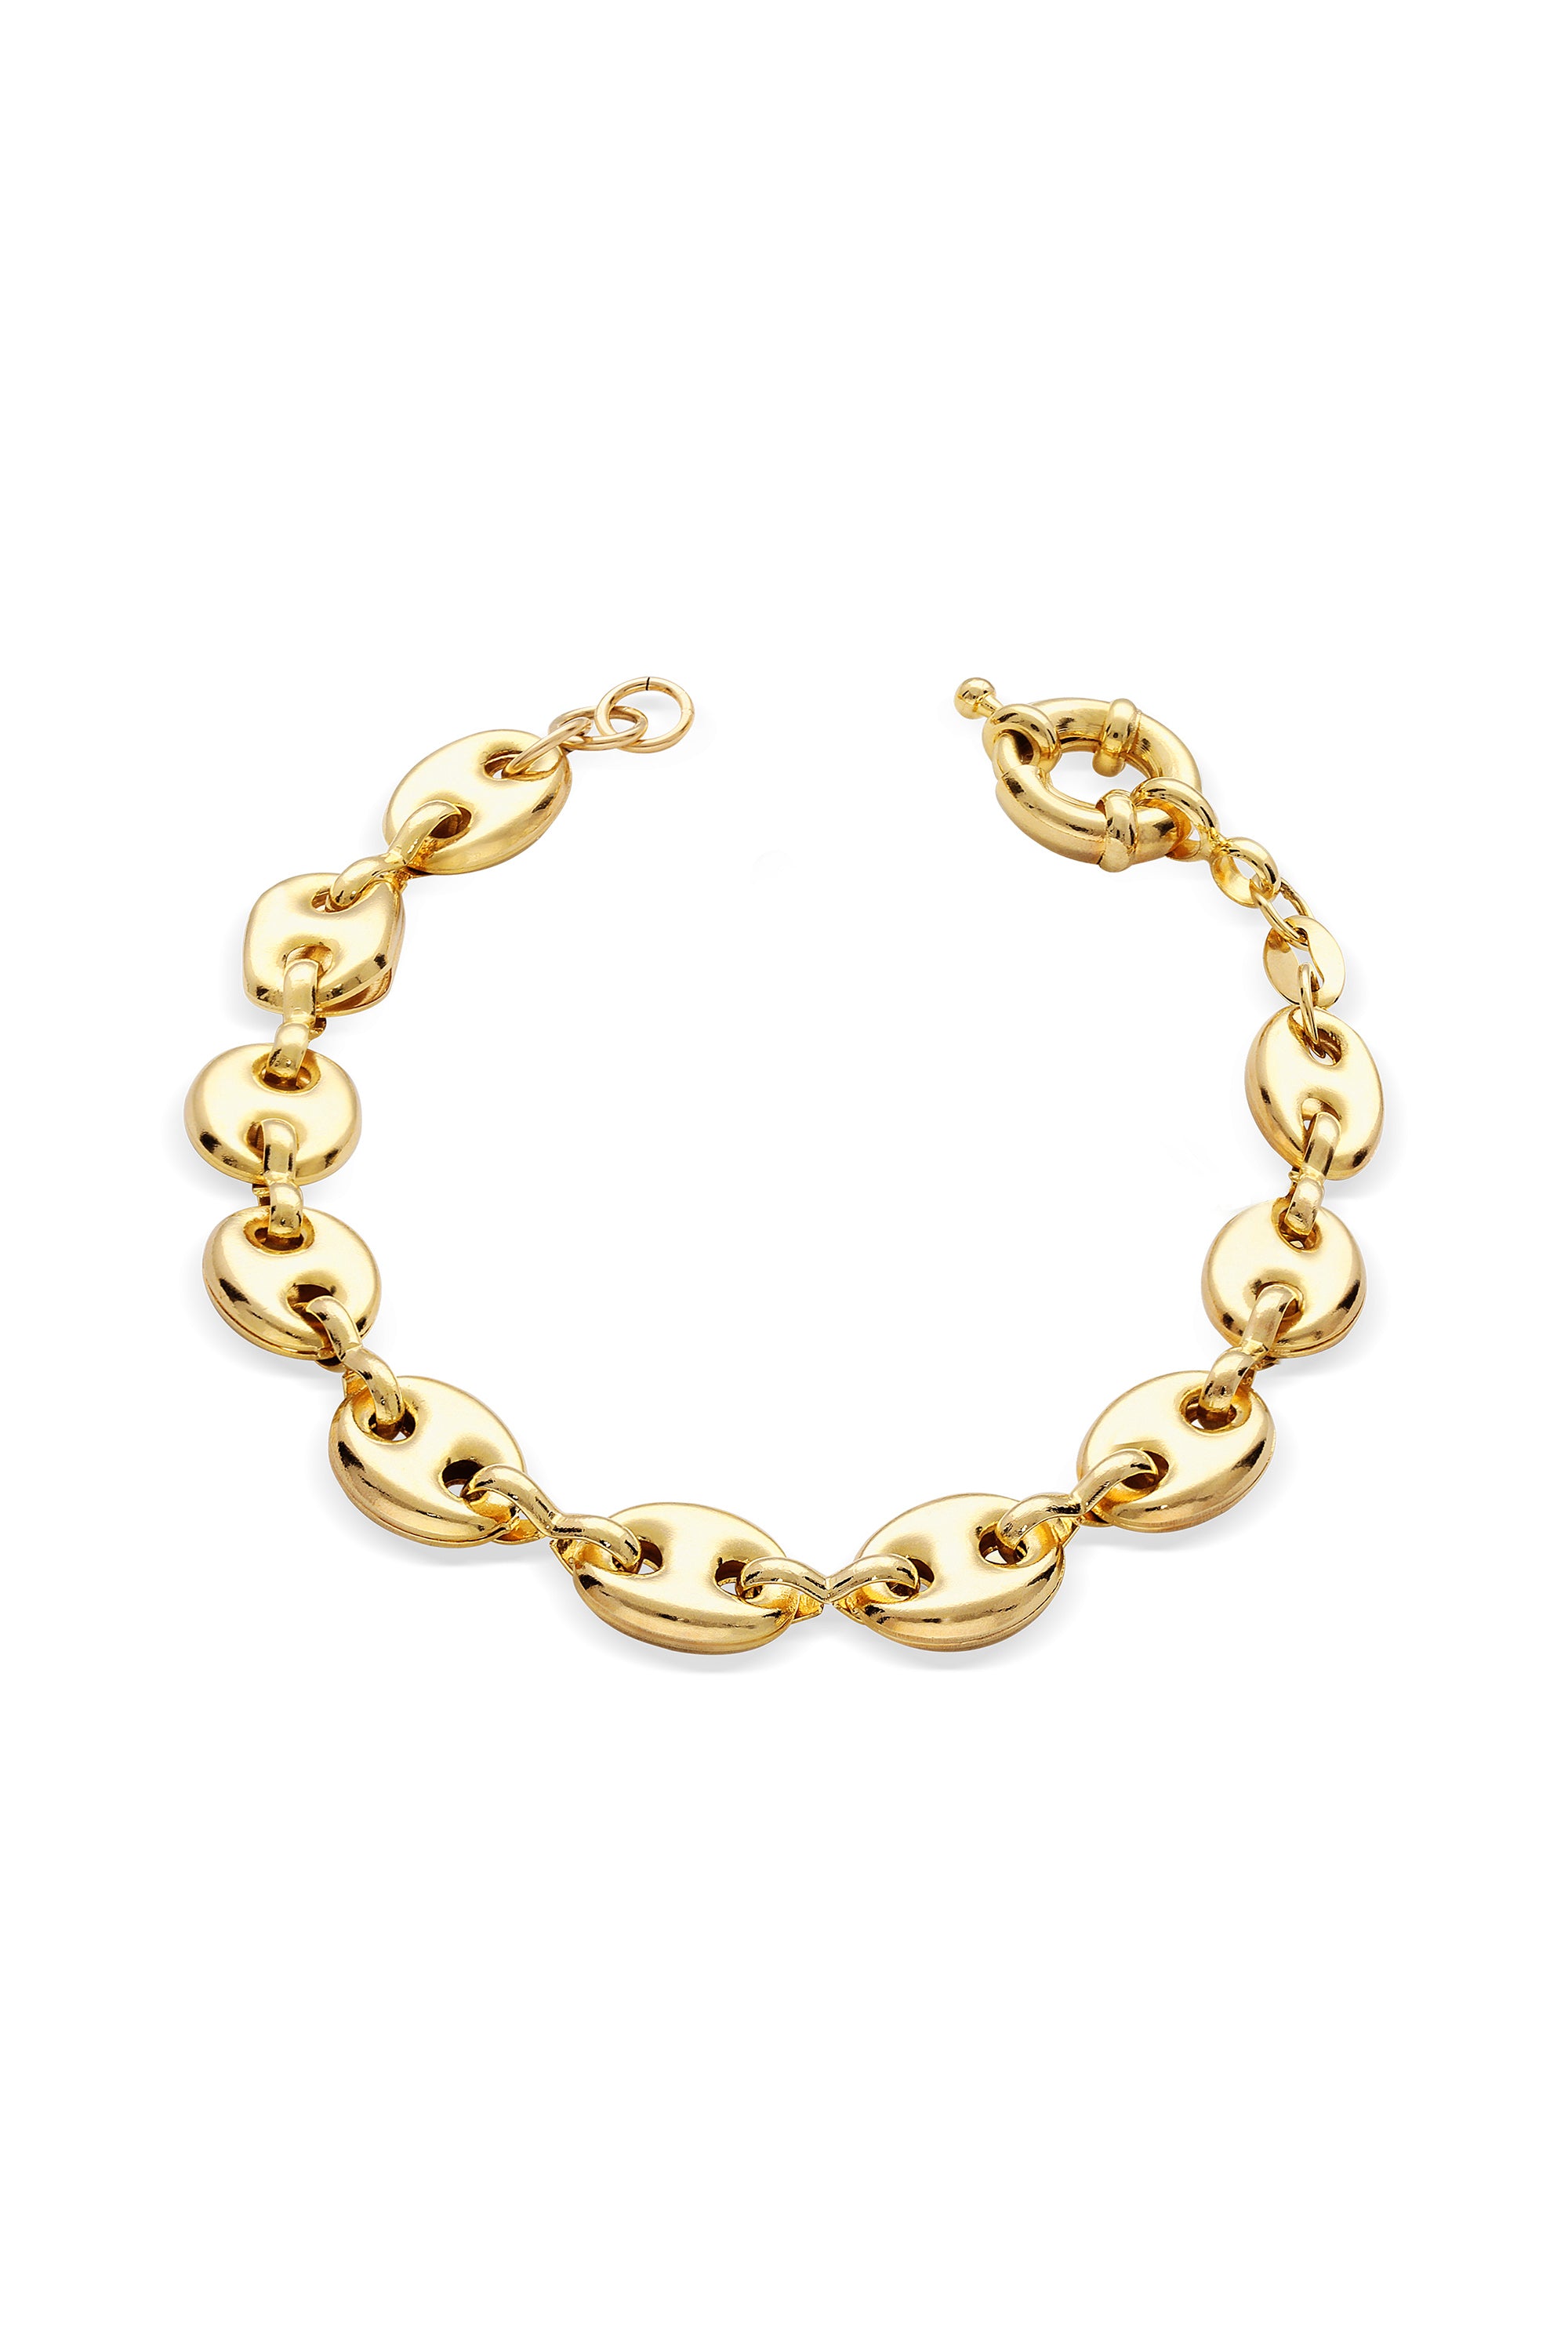 The Puffy Mariner Chain Bracelet